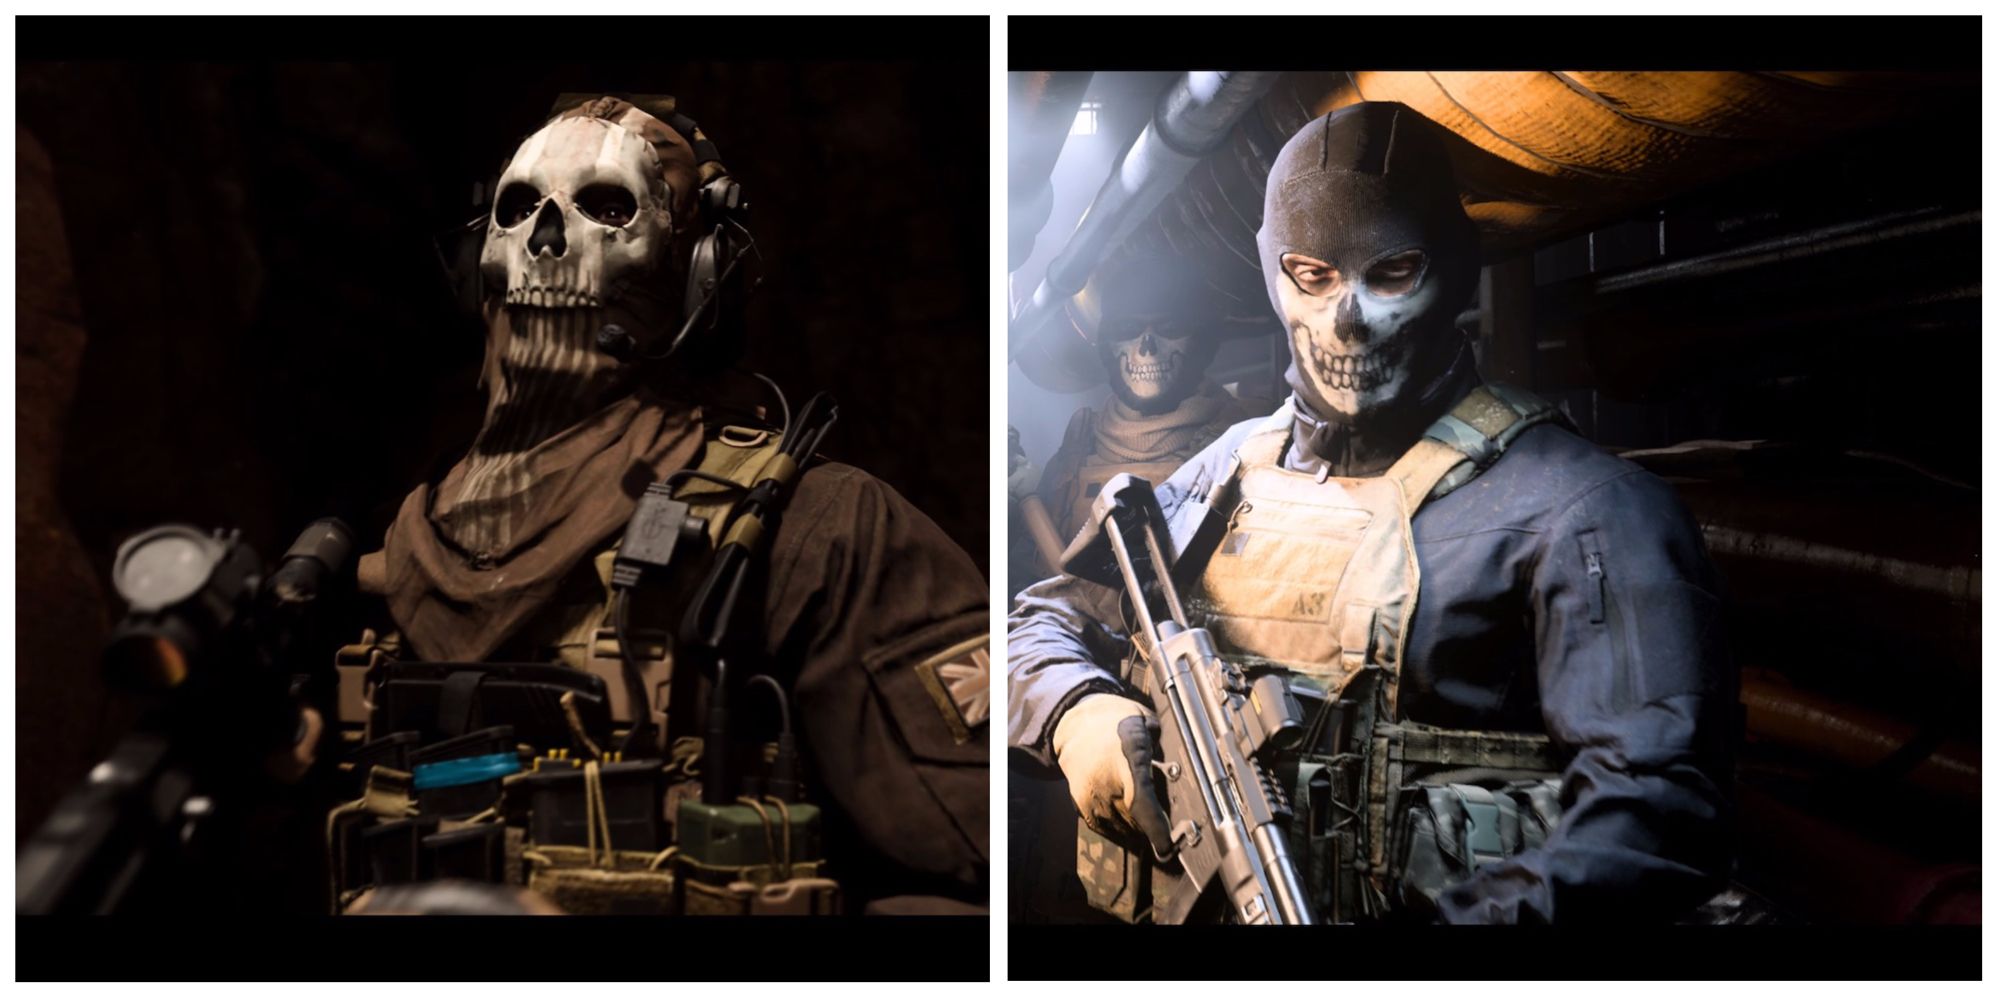 Modern Warfare 2 Fans Embroiled In Hot Ghost Drama